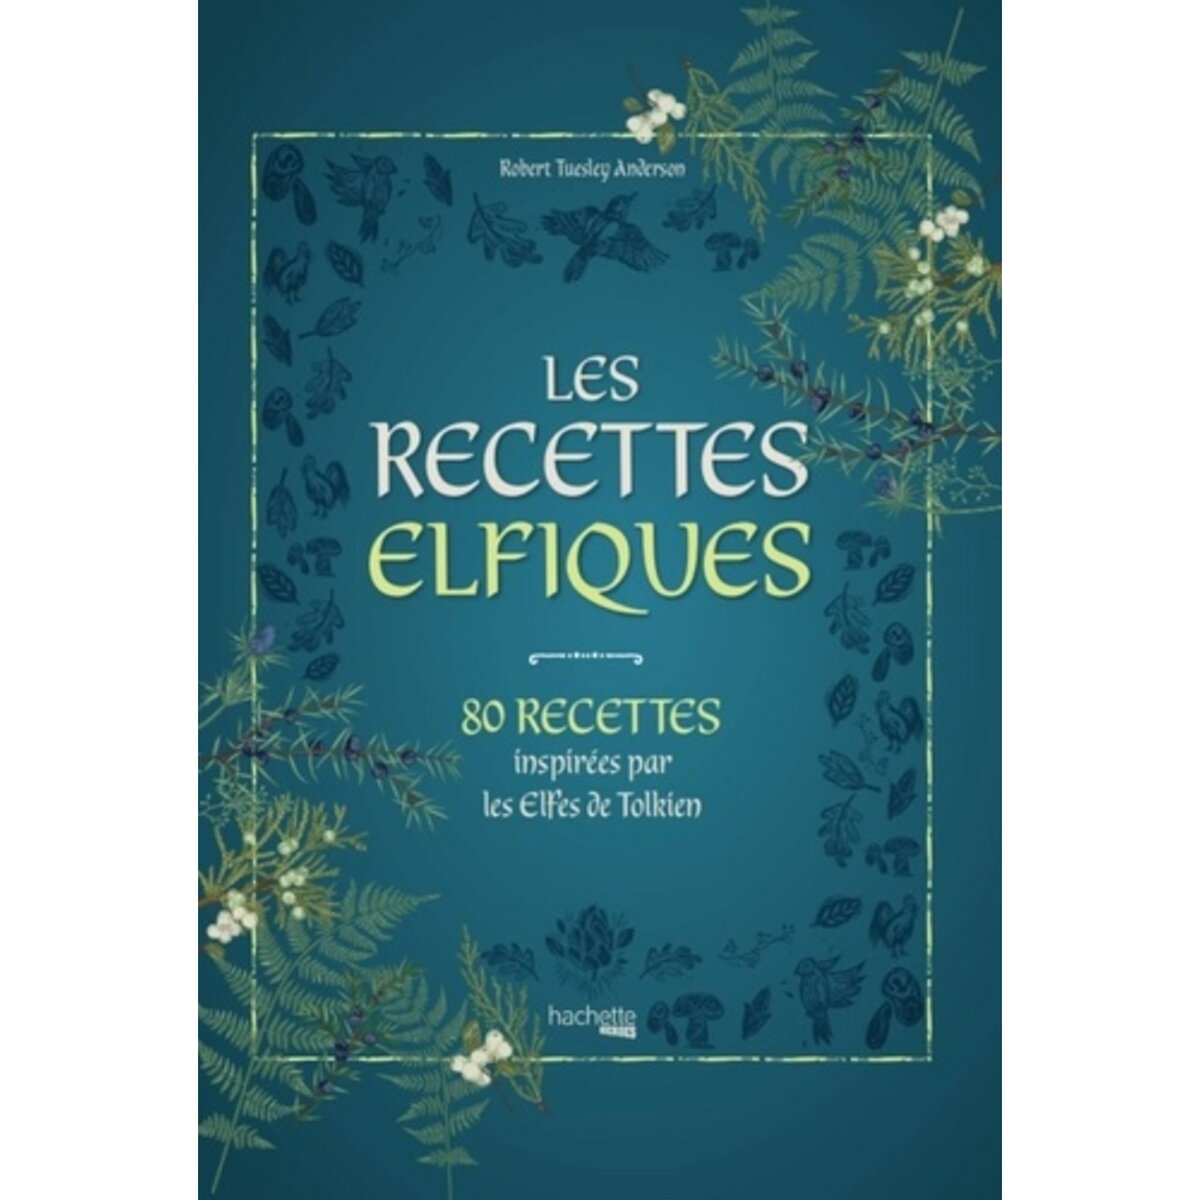  LES RECETTES ELFIQUES. 80 RECETTES INSPIREES PAR LES ELFES DE TOLKIEN, Tuesley Anderson Robert